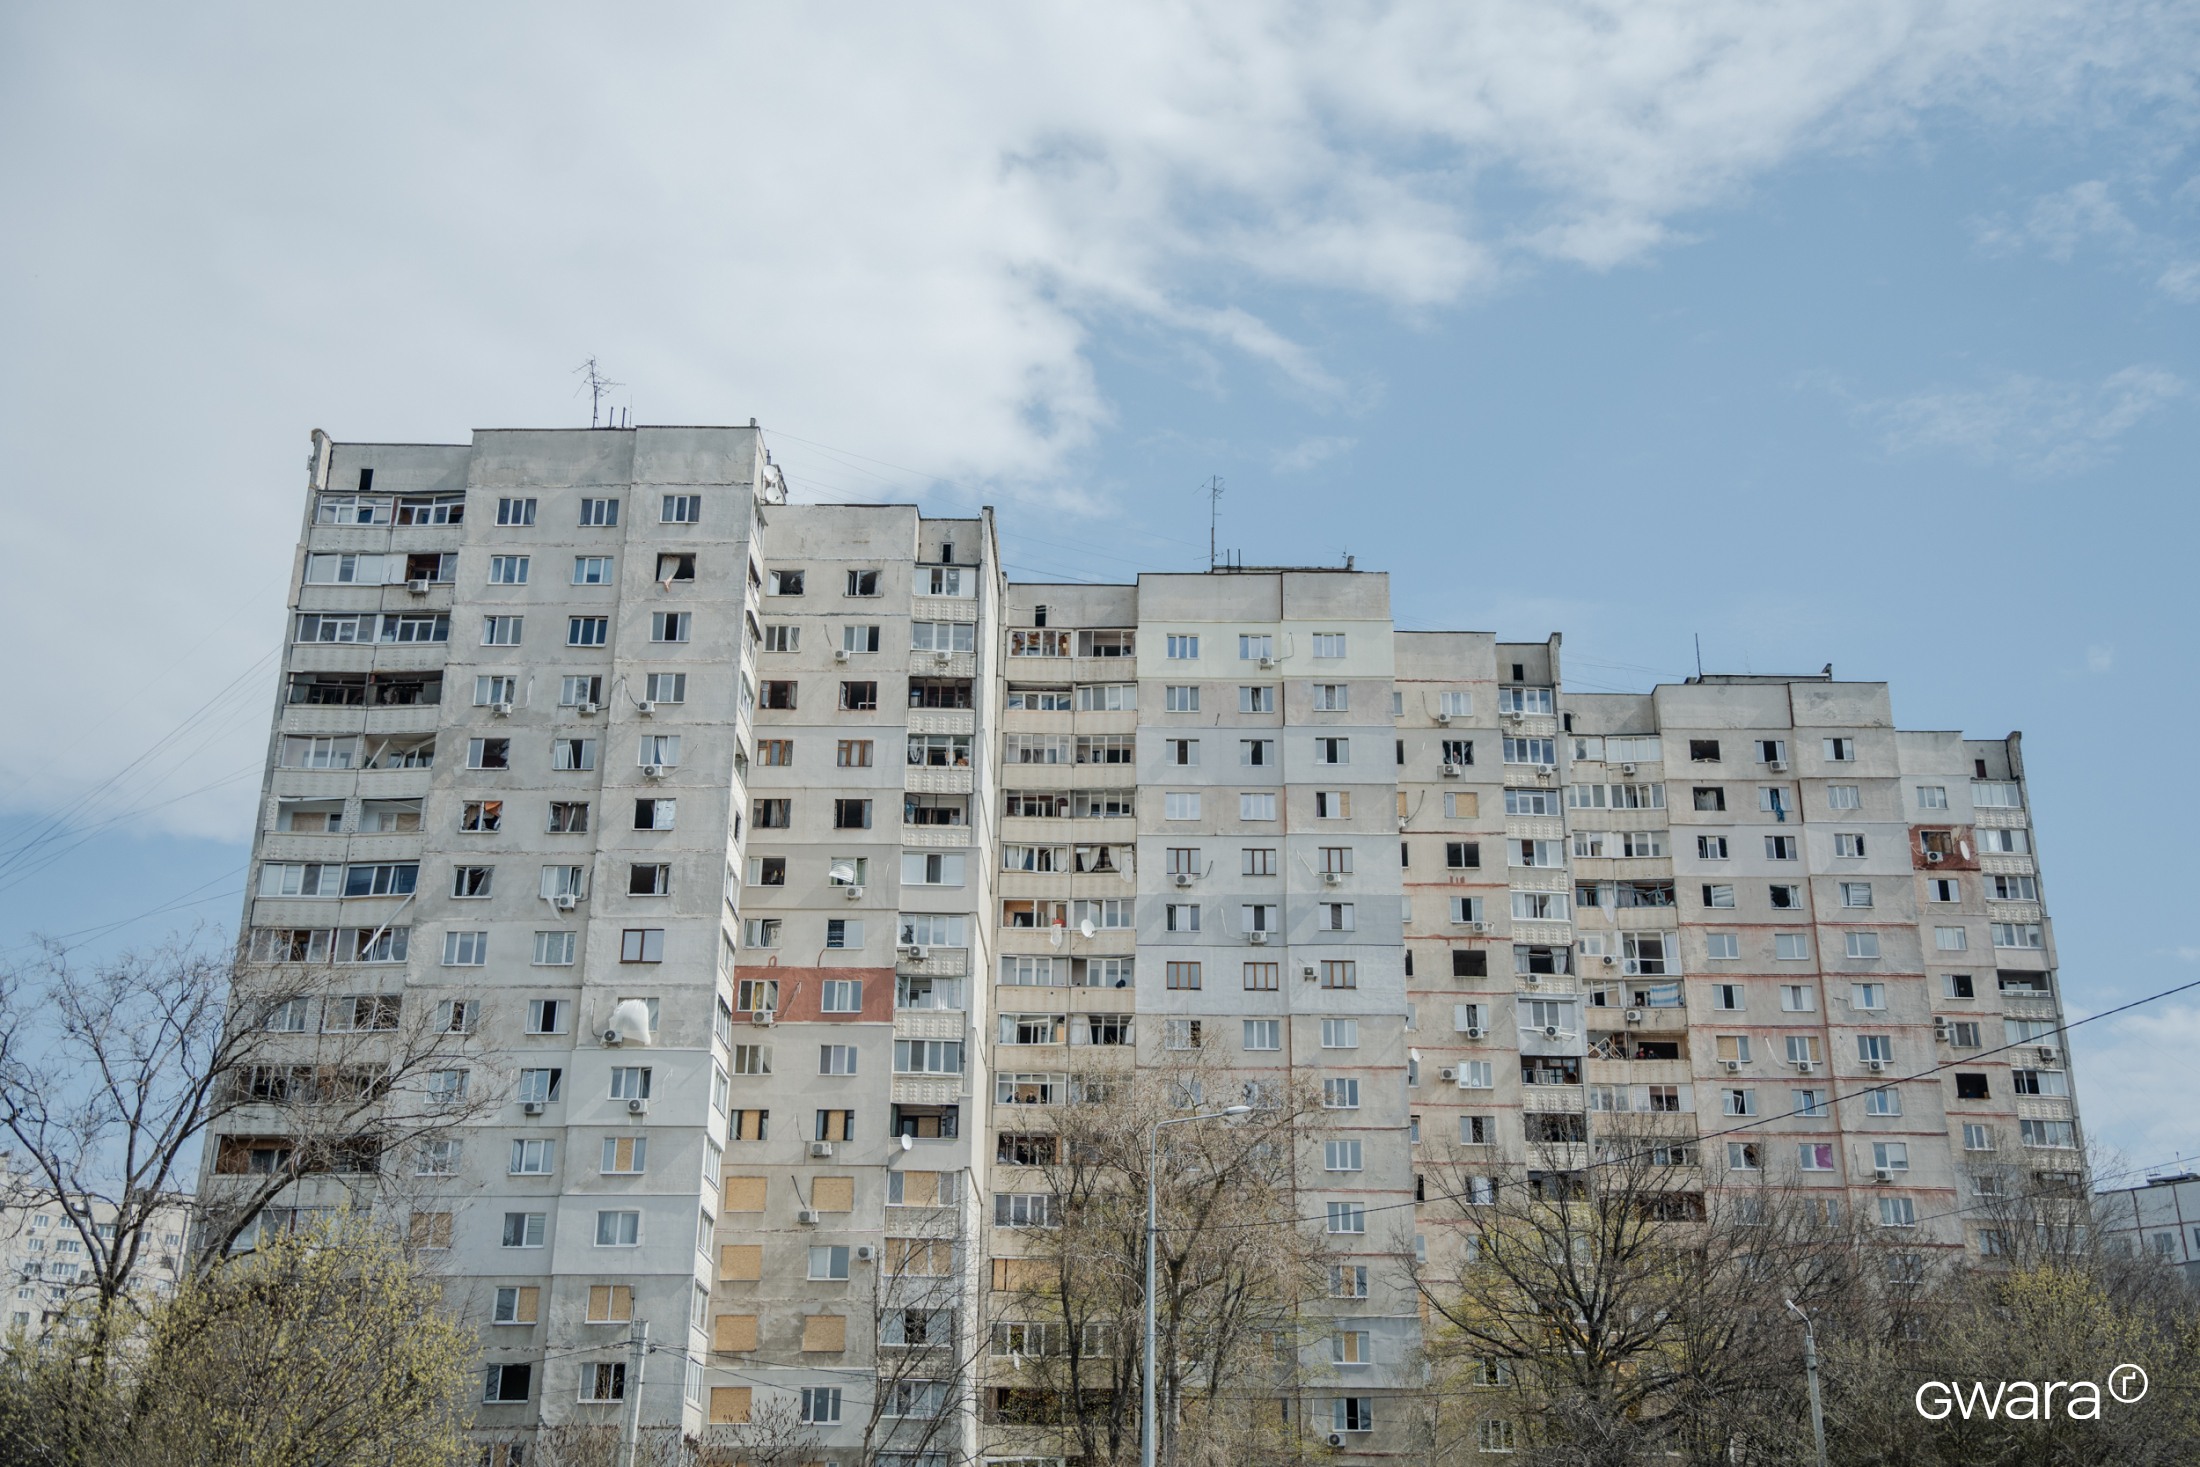 Building damaged by Russian missile strike on Shevchenkivskyi district of Kharkiv on April 6 / Photo: Ivan Samoilov for Gwara Media